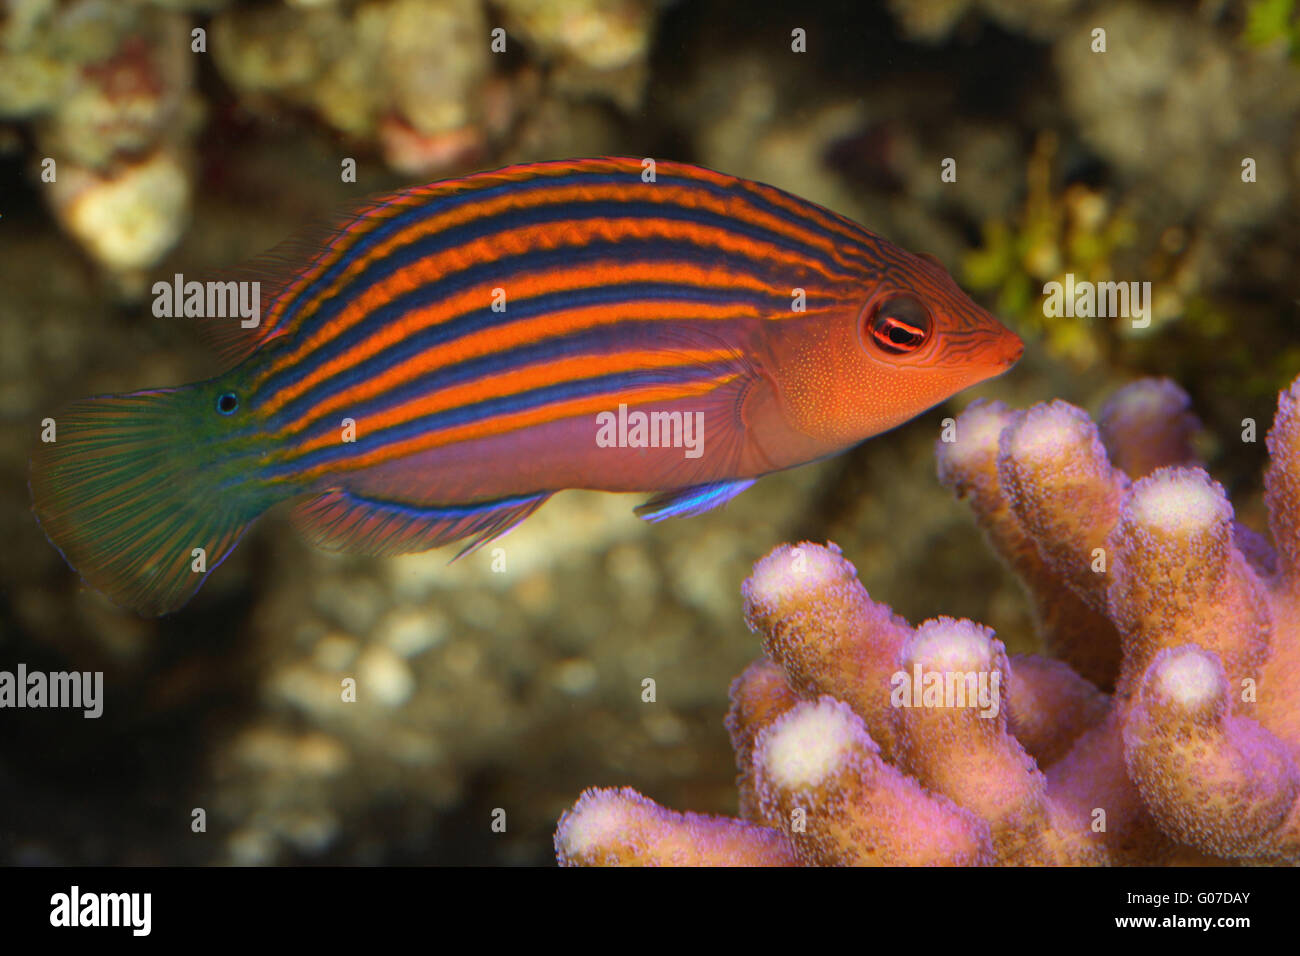 Sixline wrasse, Pseudocheilinus hexataenia, reef aquarium, Emiliano Spada Stock Photo